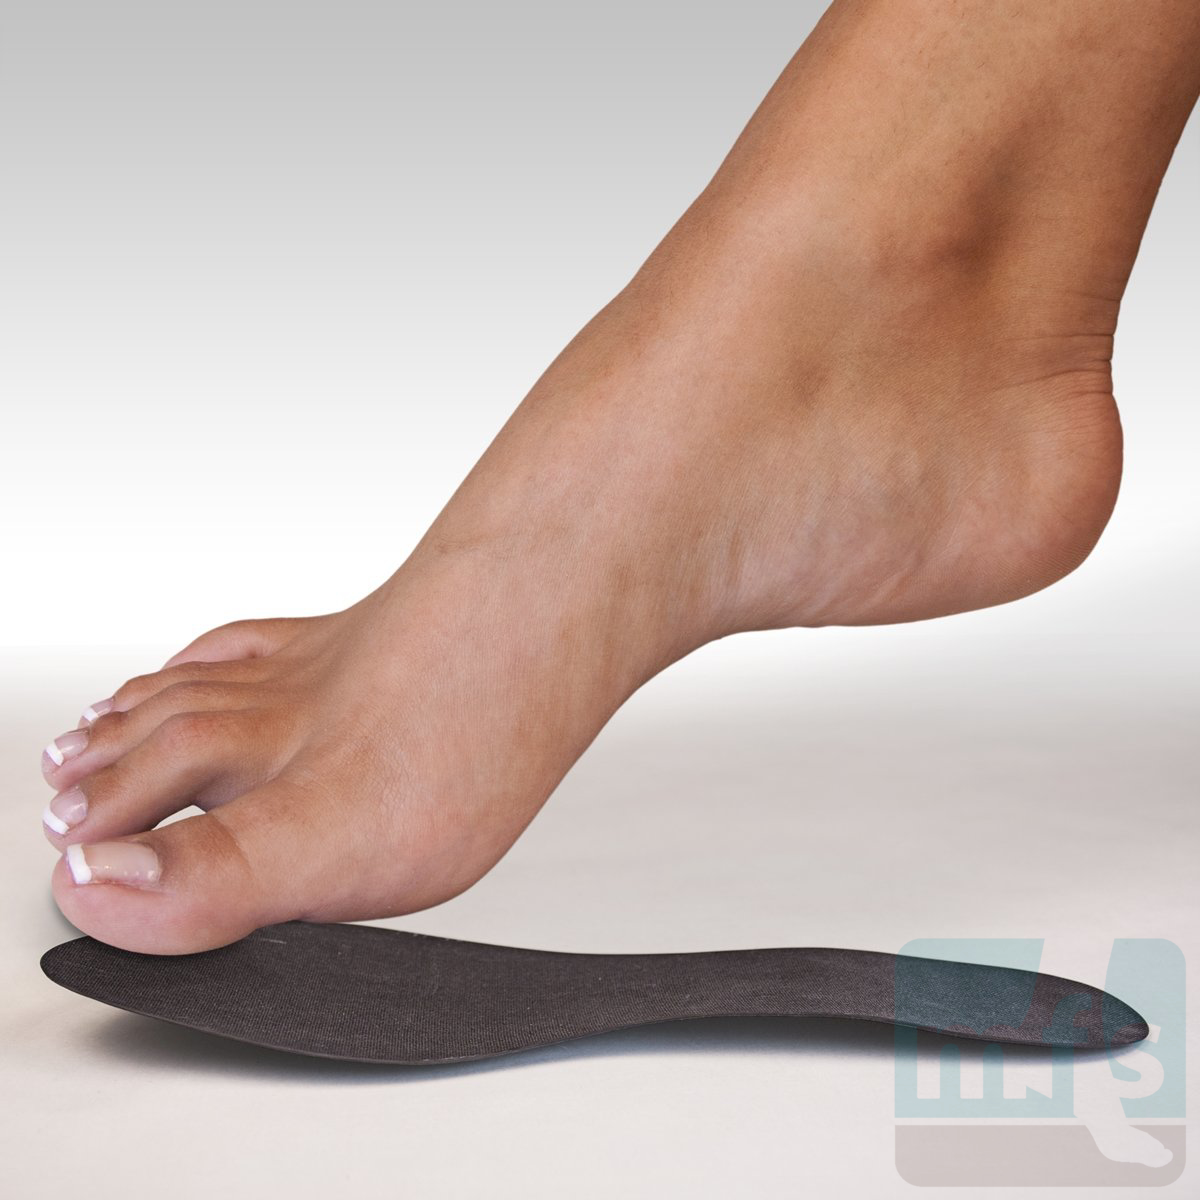 Carbon Fiber Insole Rigid Shoe Insert 1Pc Supportive Orthopedic Insert Best Fo 